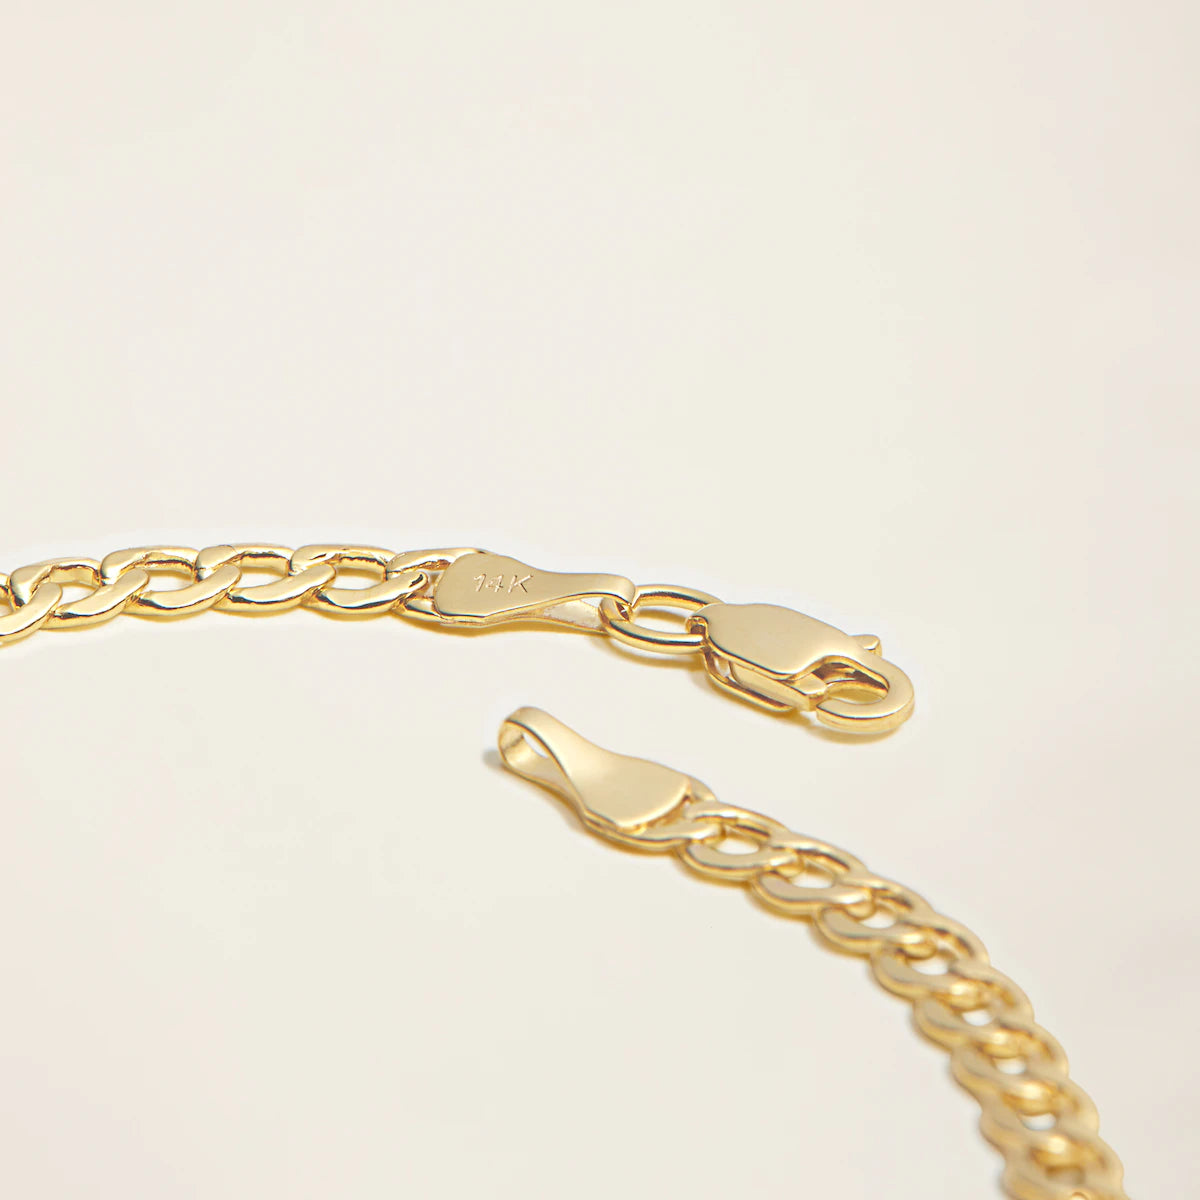 GoldeeLux 14k Solid Gold Curb Chain Bracelet